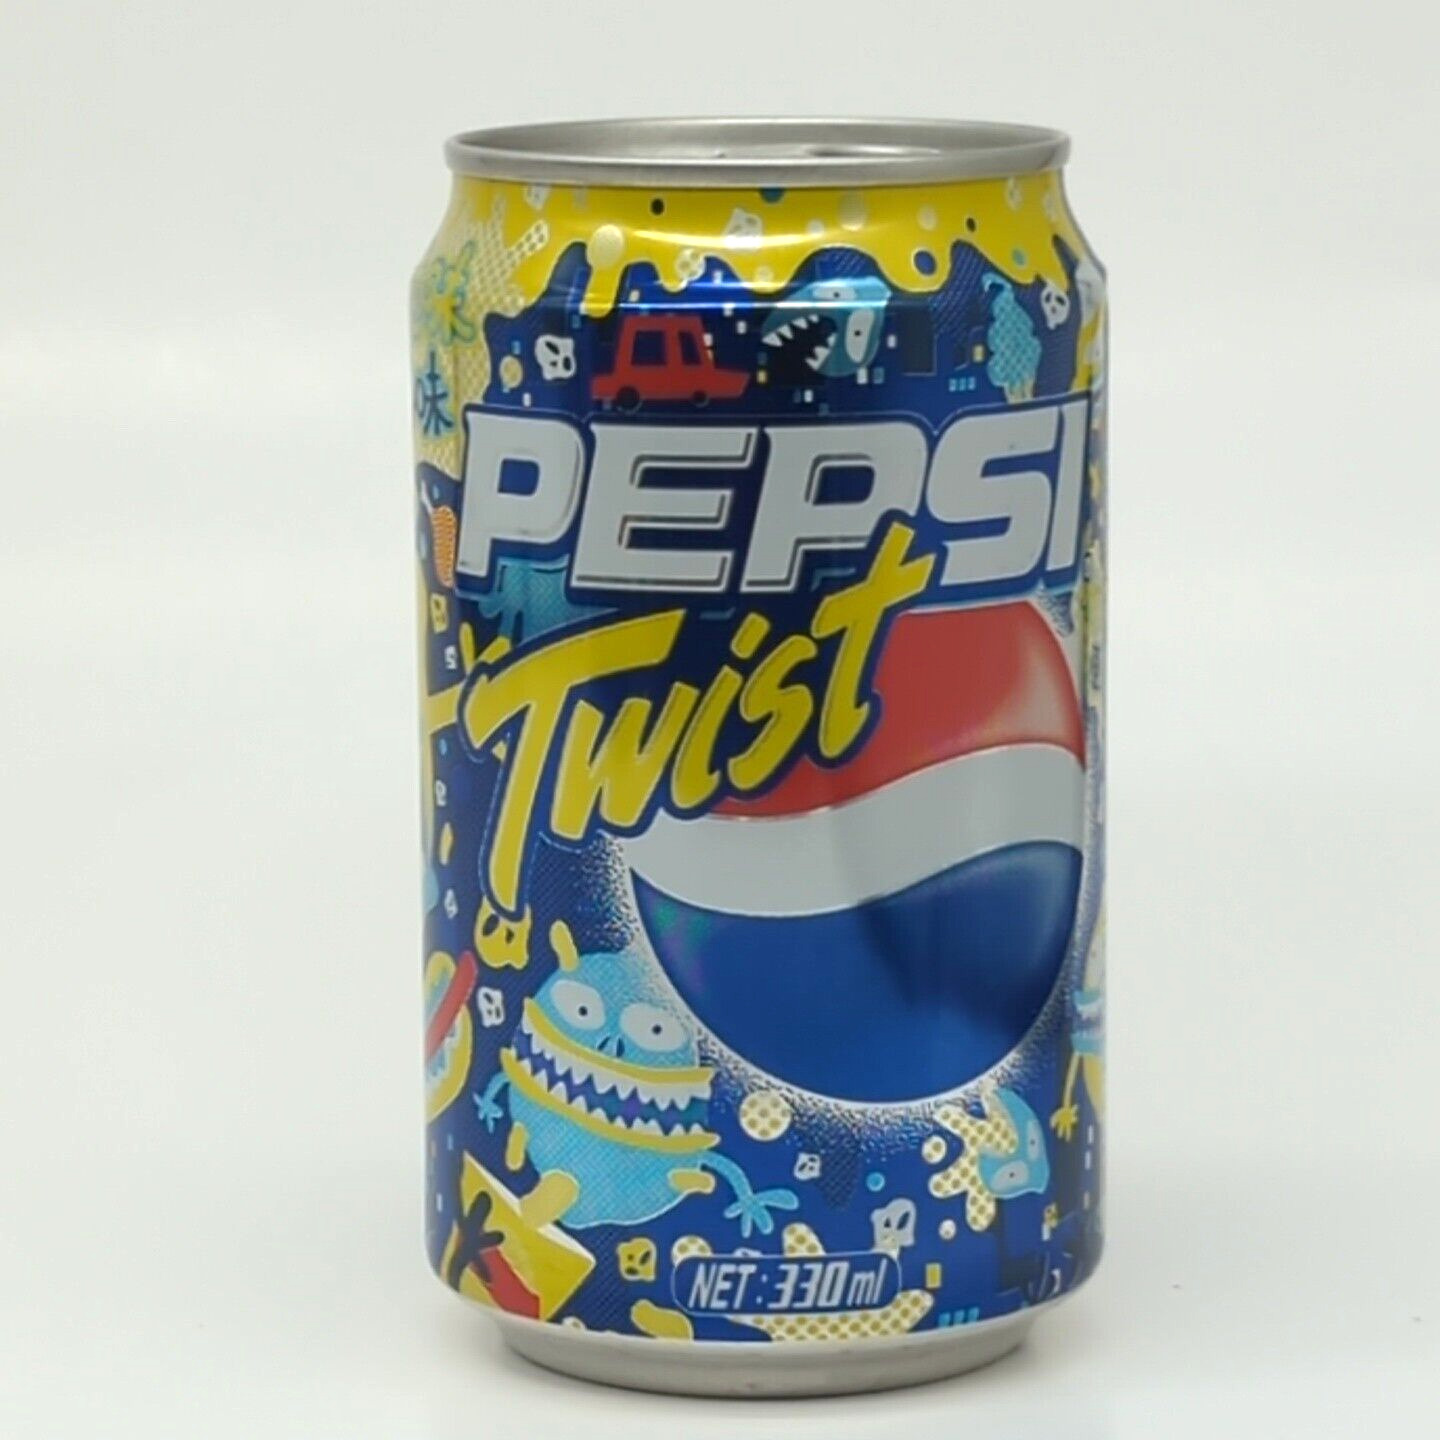 Pepsi Lemon Twist Monster Can from Hong Kong